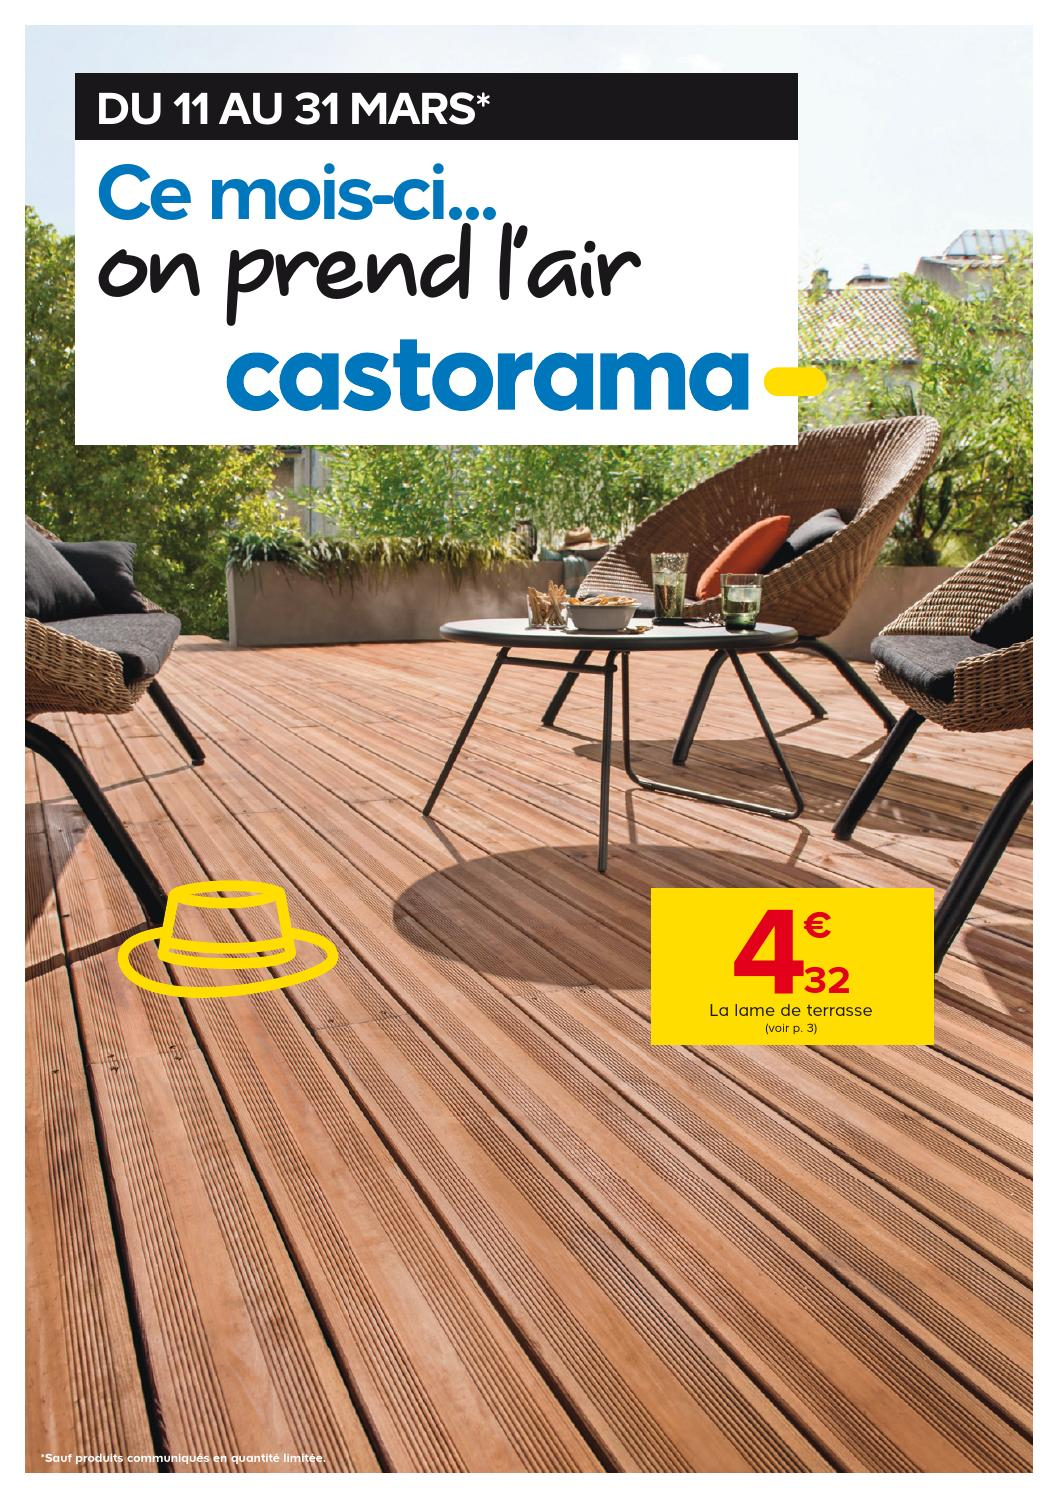 Castorama Catalogue 11 31Mars2015 By Promocatalogues - Issuu dedans Plot Terrasse Reglable Castorama